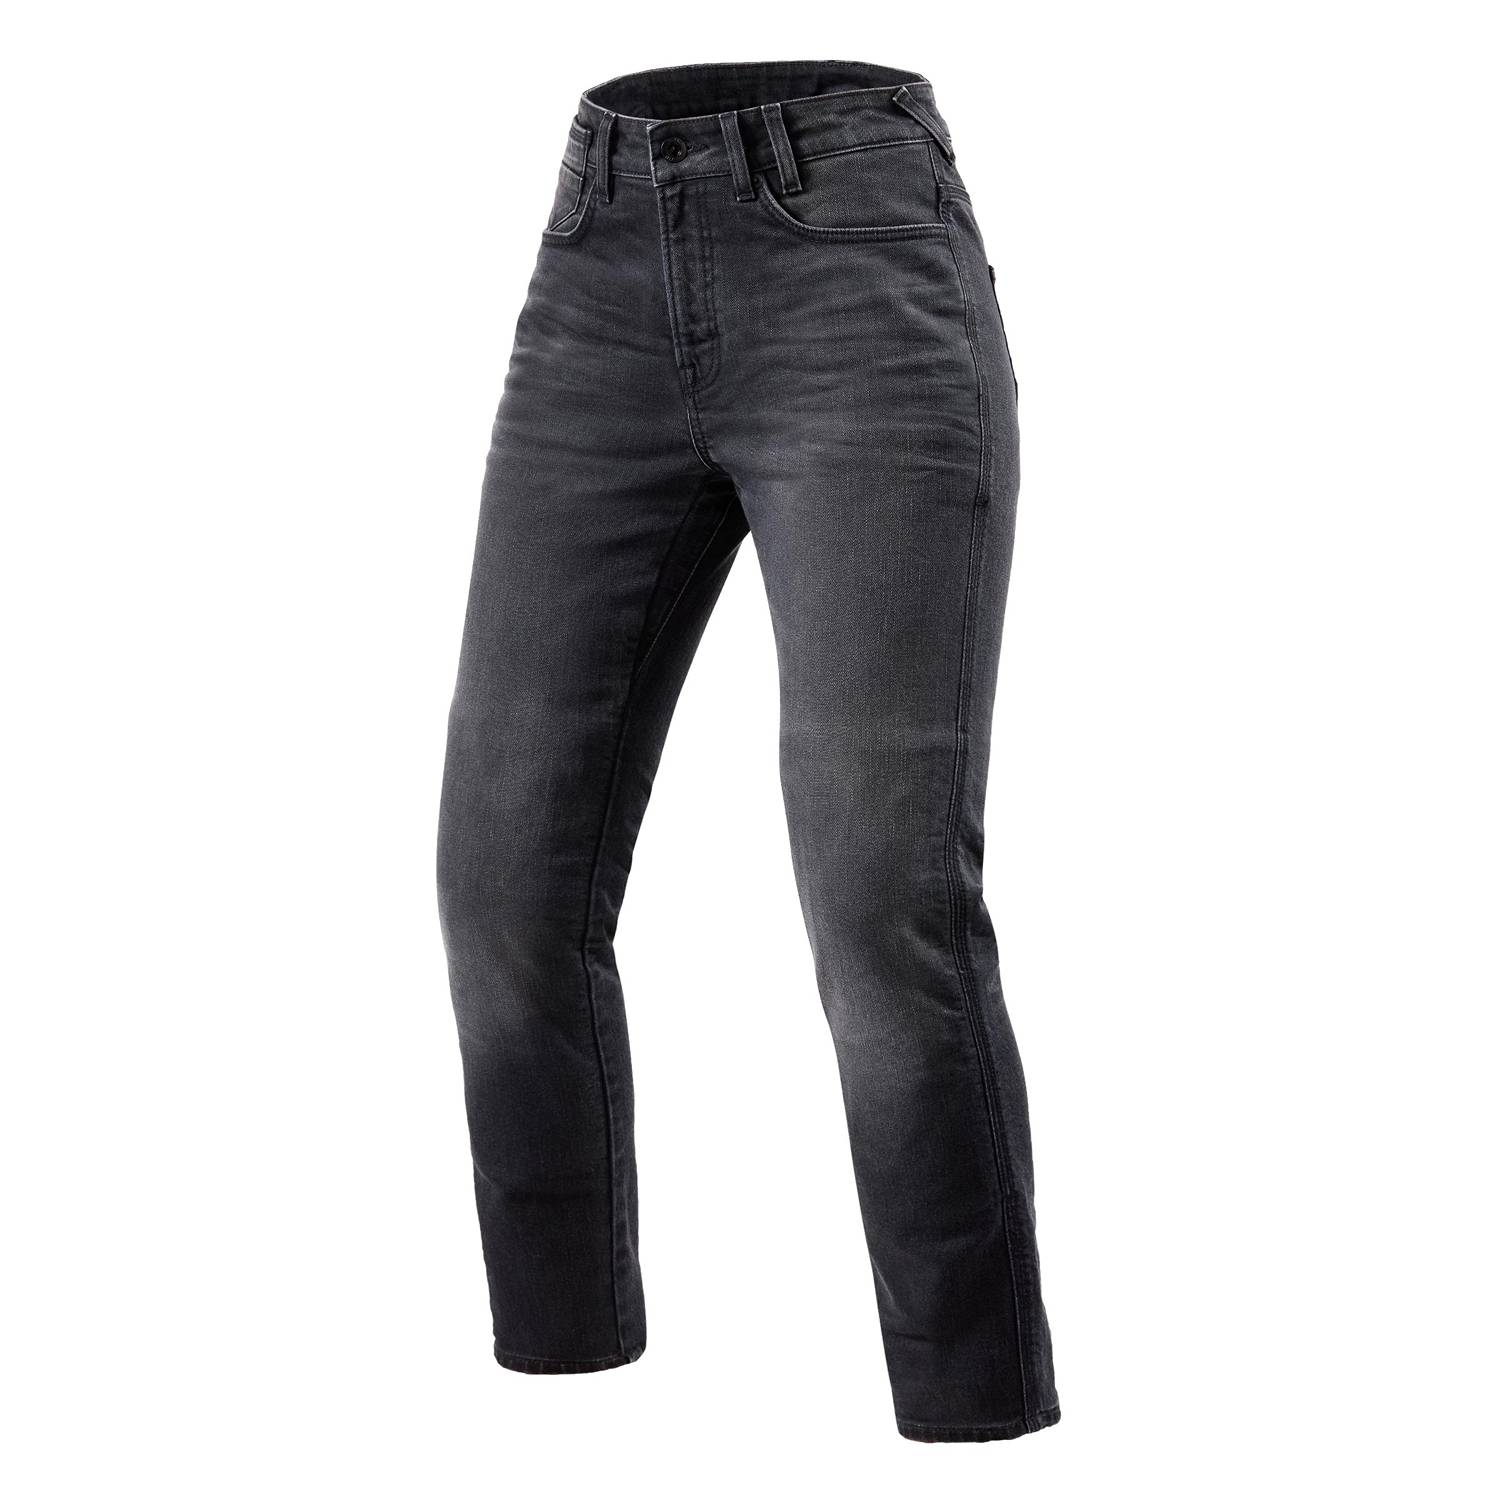 Image of REV'IT! Jeans Victoria 2 Ladies SF Mid Grey Used Motorcycle Jeans Size L32/W24 EN